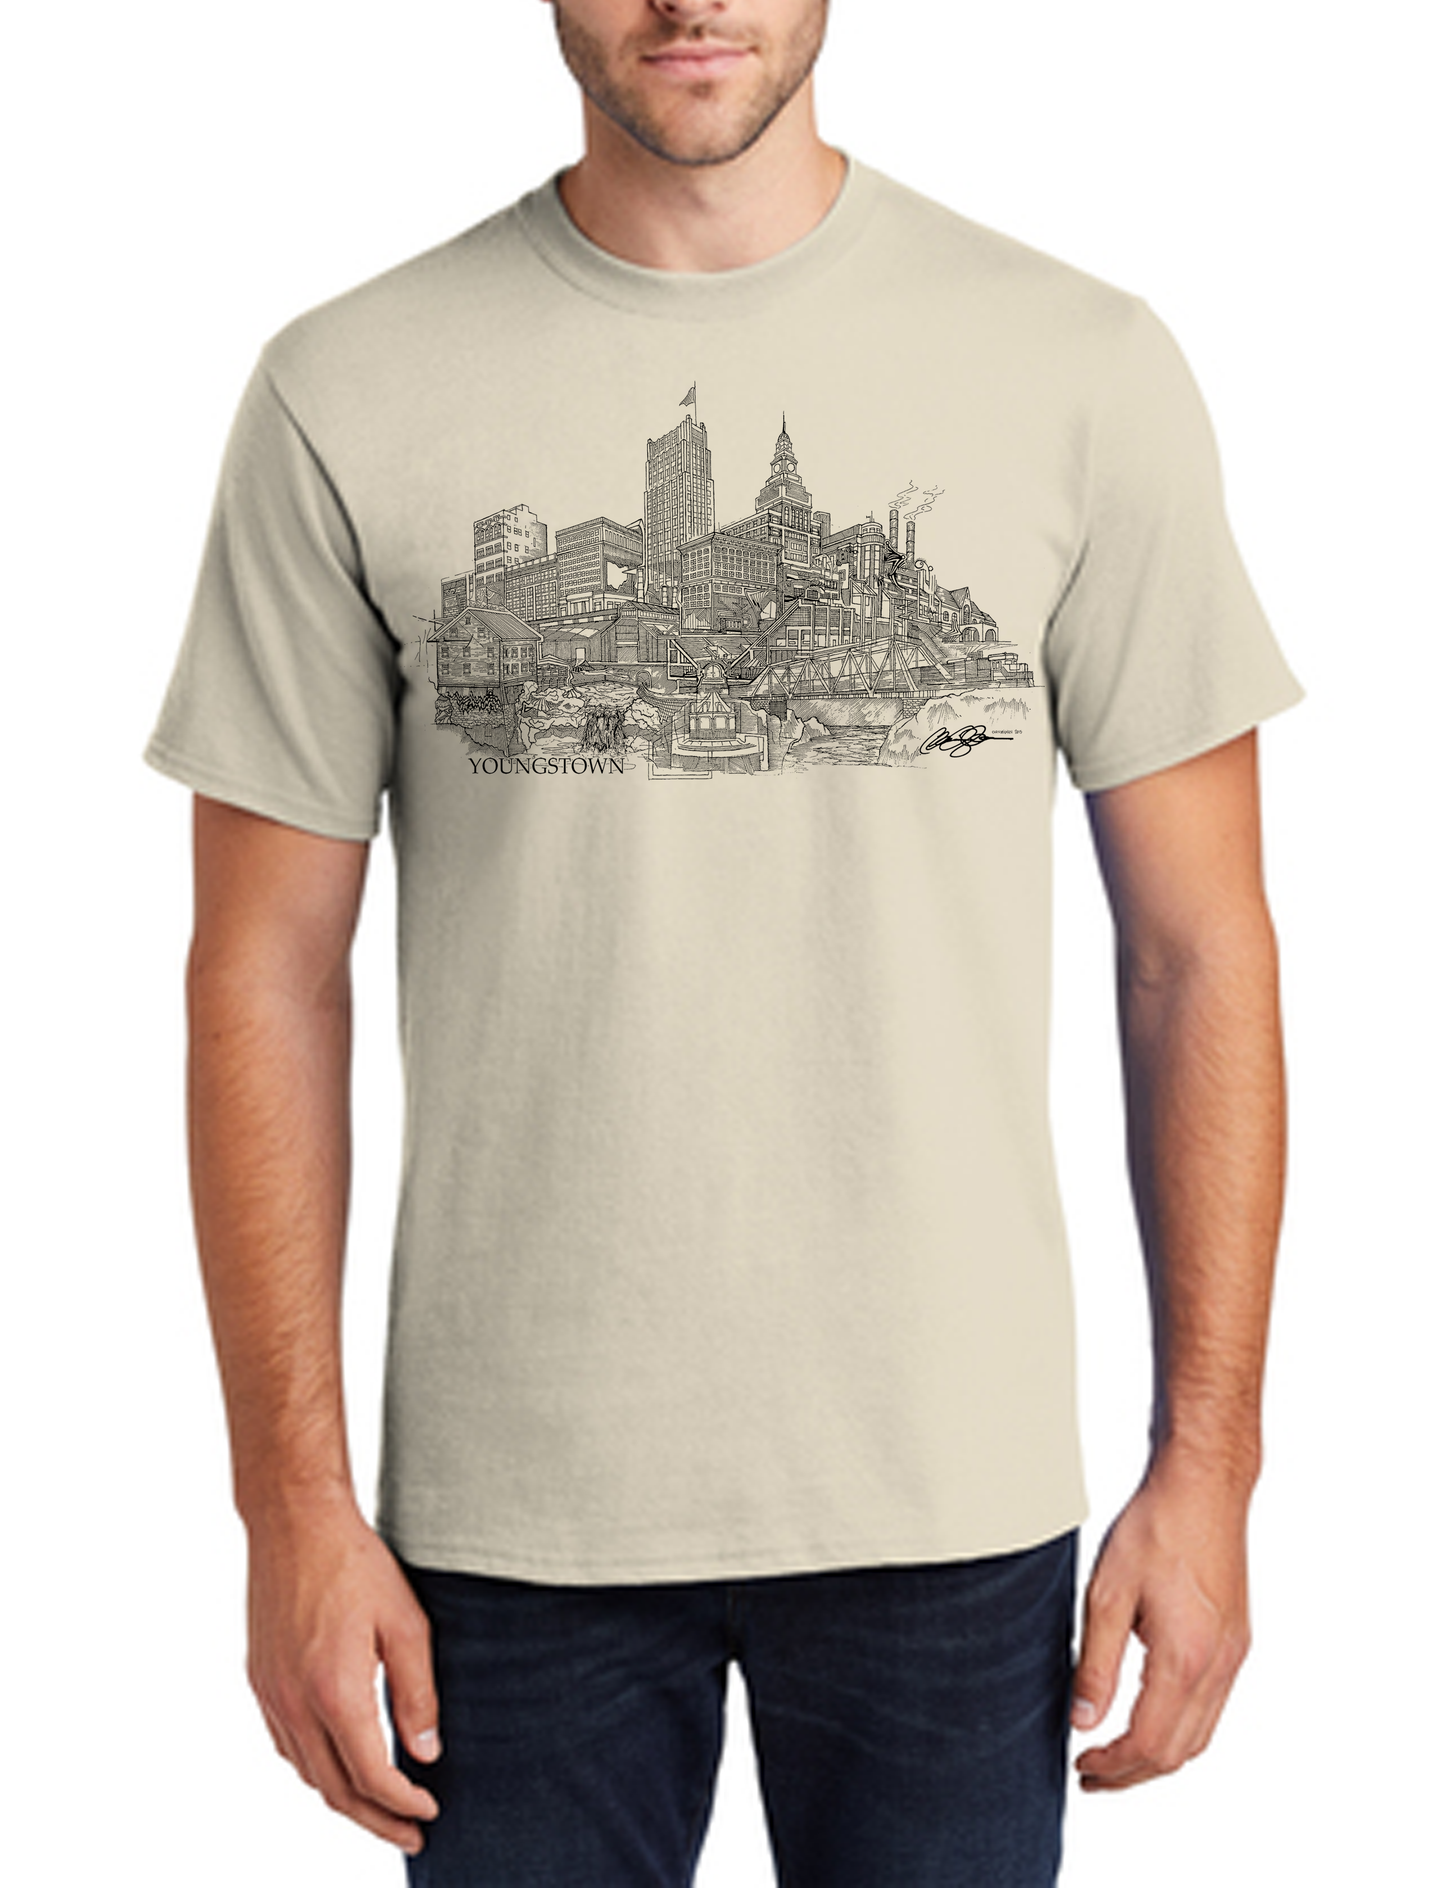 Youngstown T-Shirt Sand/Beige